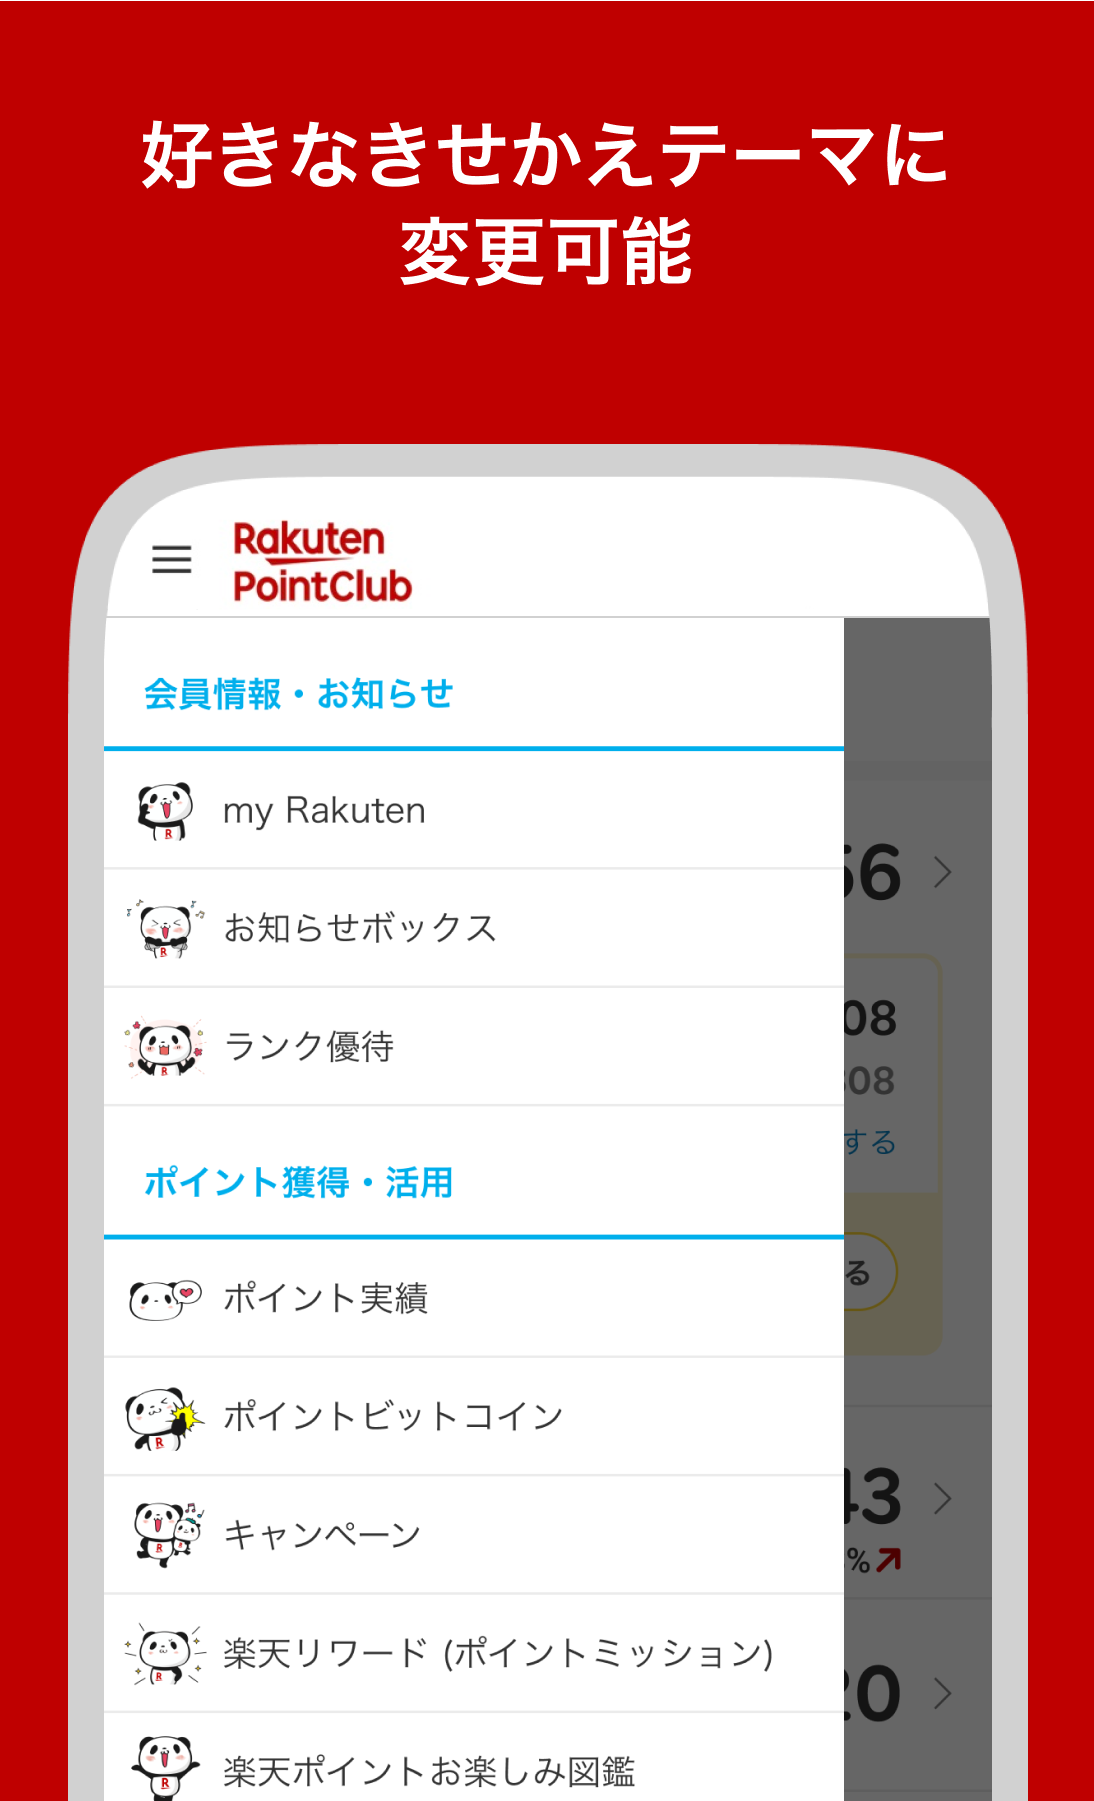 Android application 楽天ポイントクラブ – 楽天ポイント管理アプリ screenshort